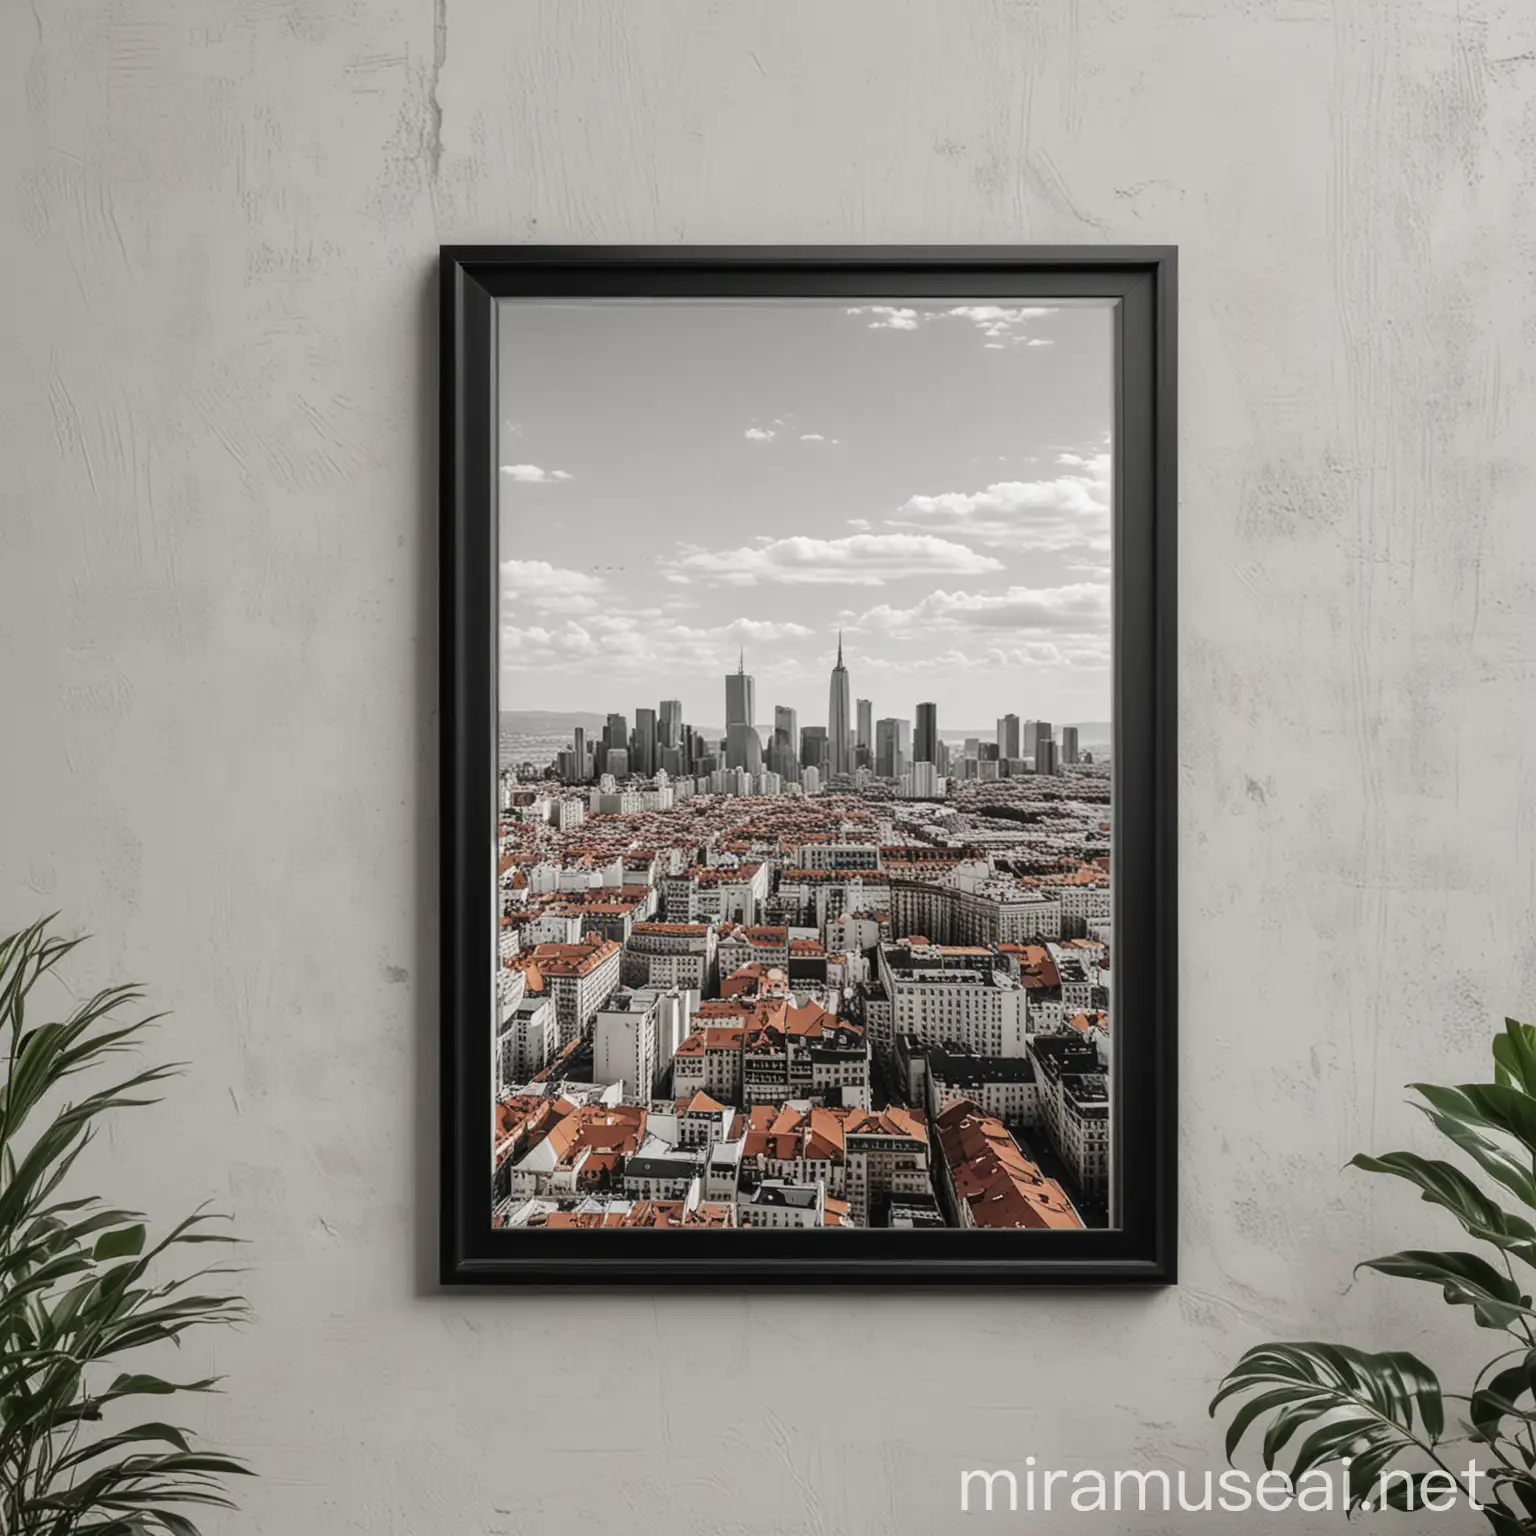 Urban Cityscape Black Frame Mockup on Wall